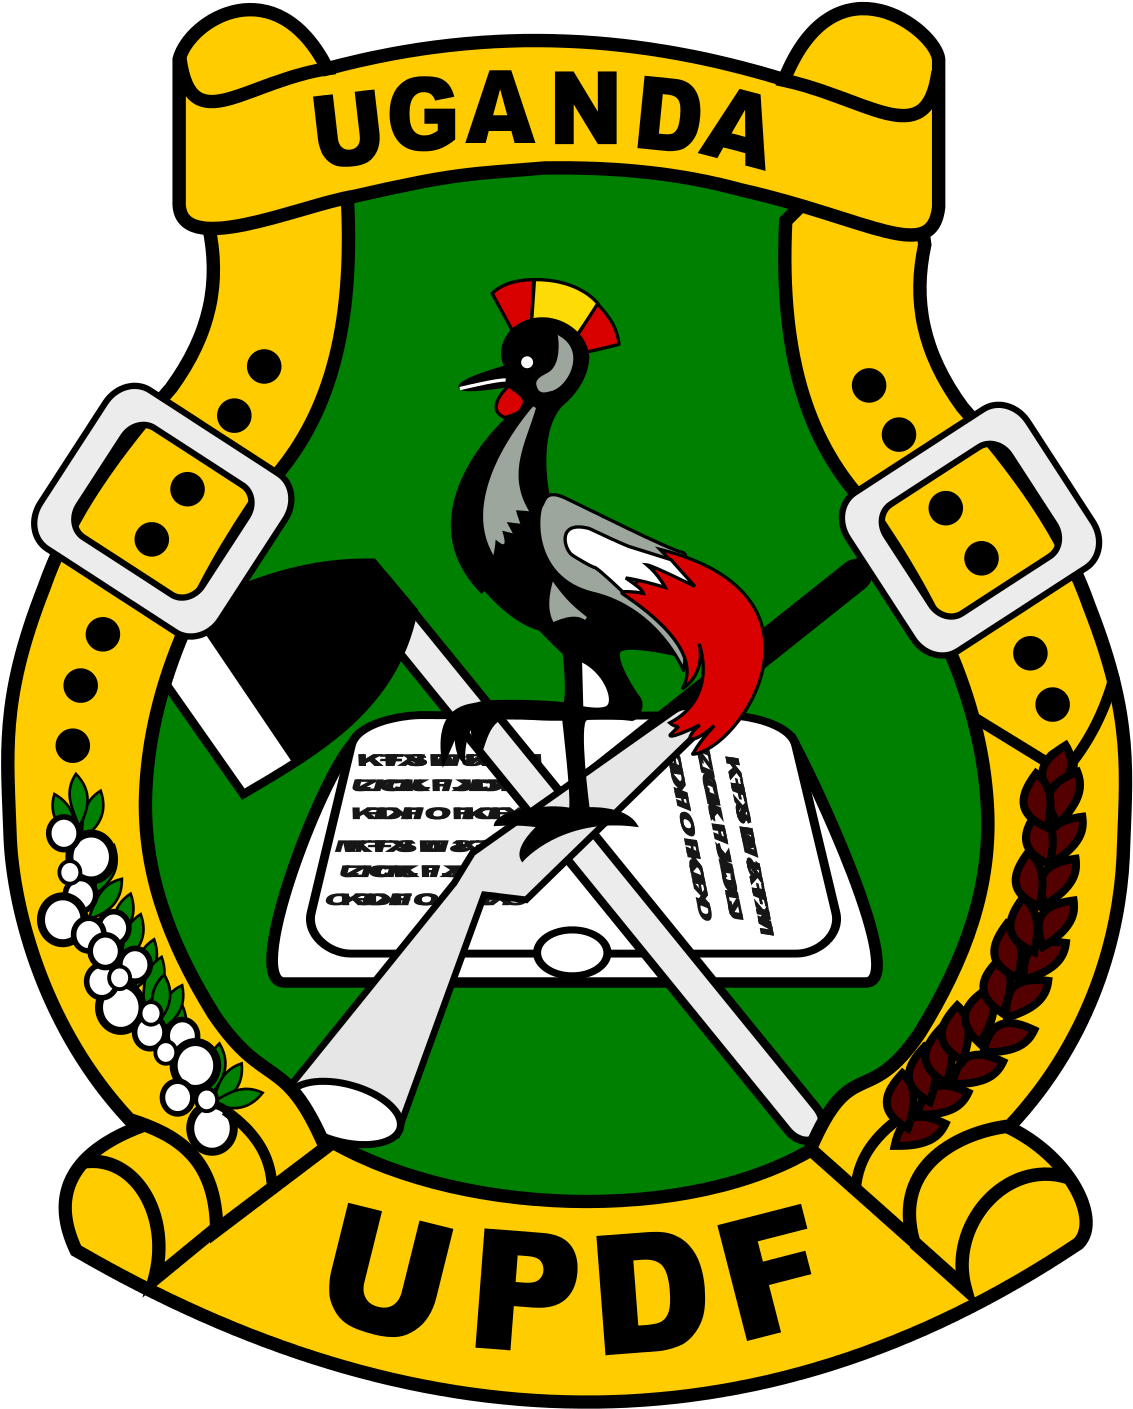 Federation Of Uganda Football Associations (1200x1522)